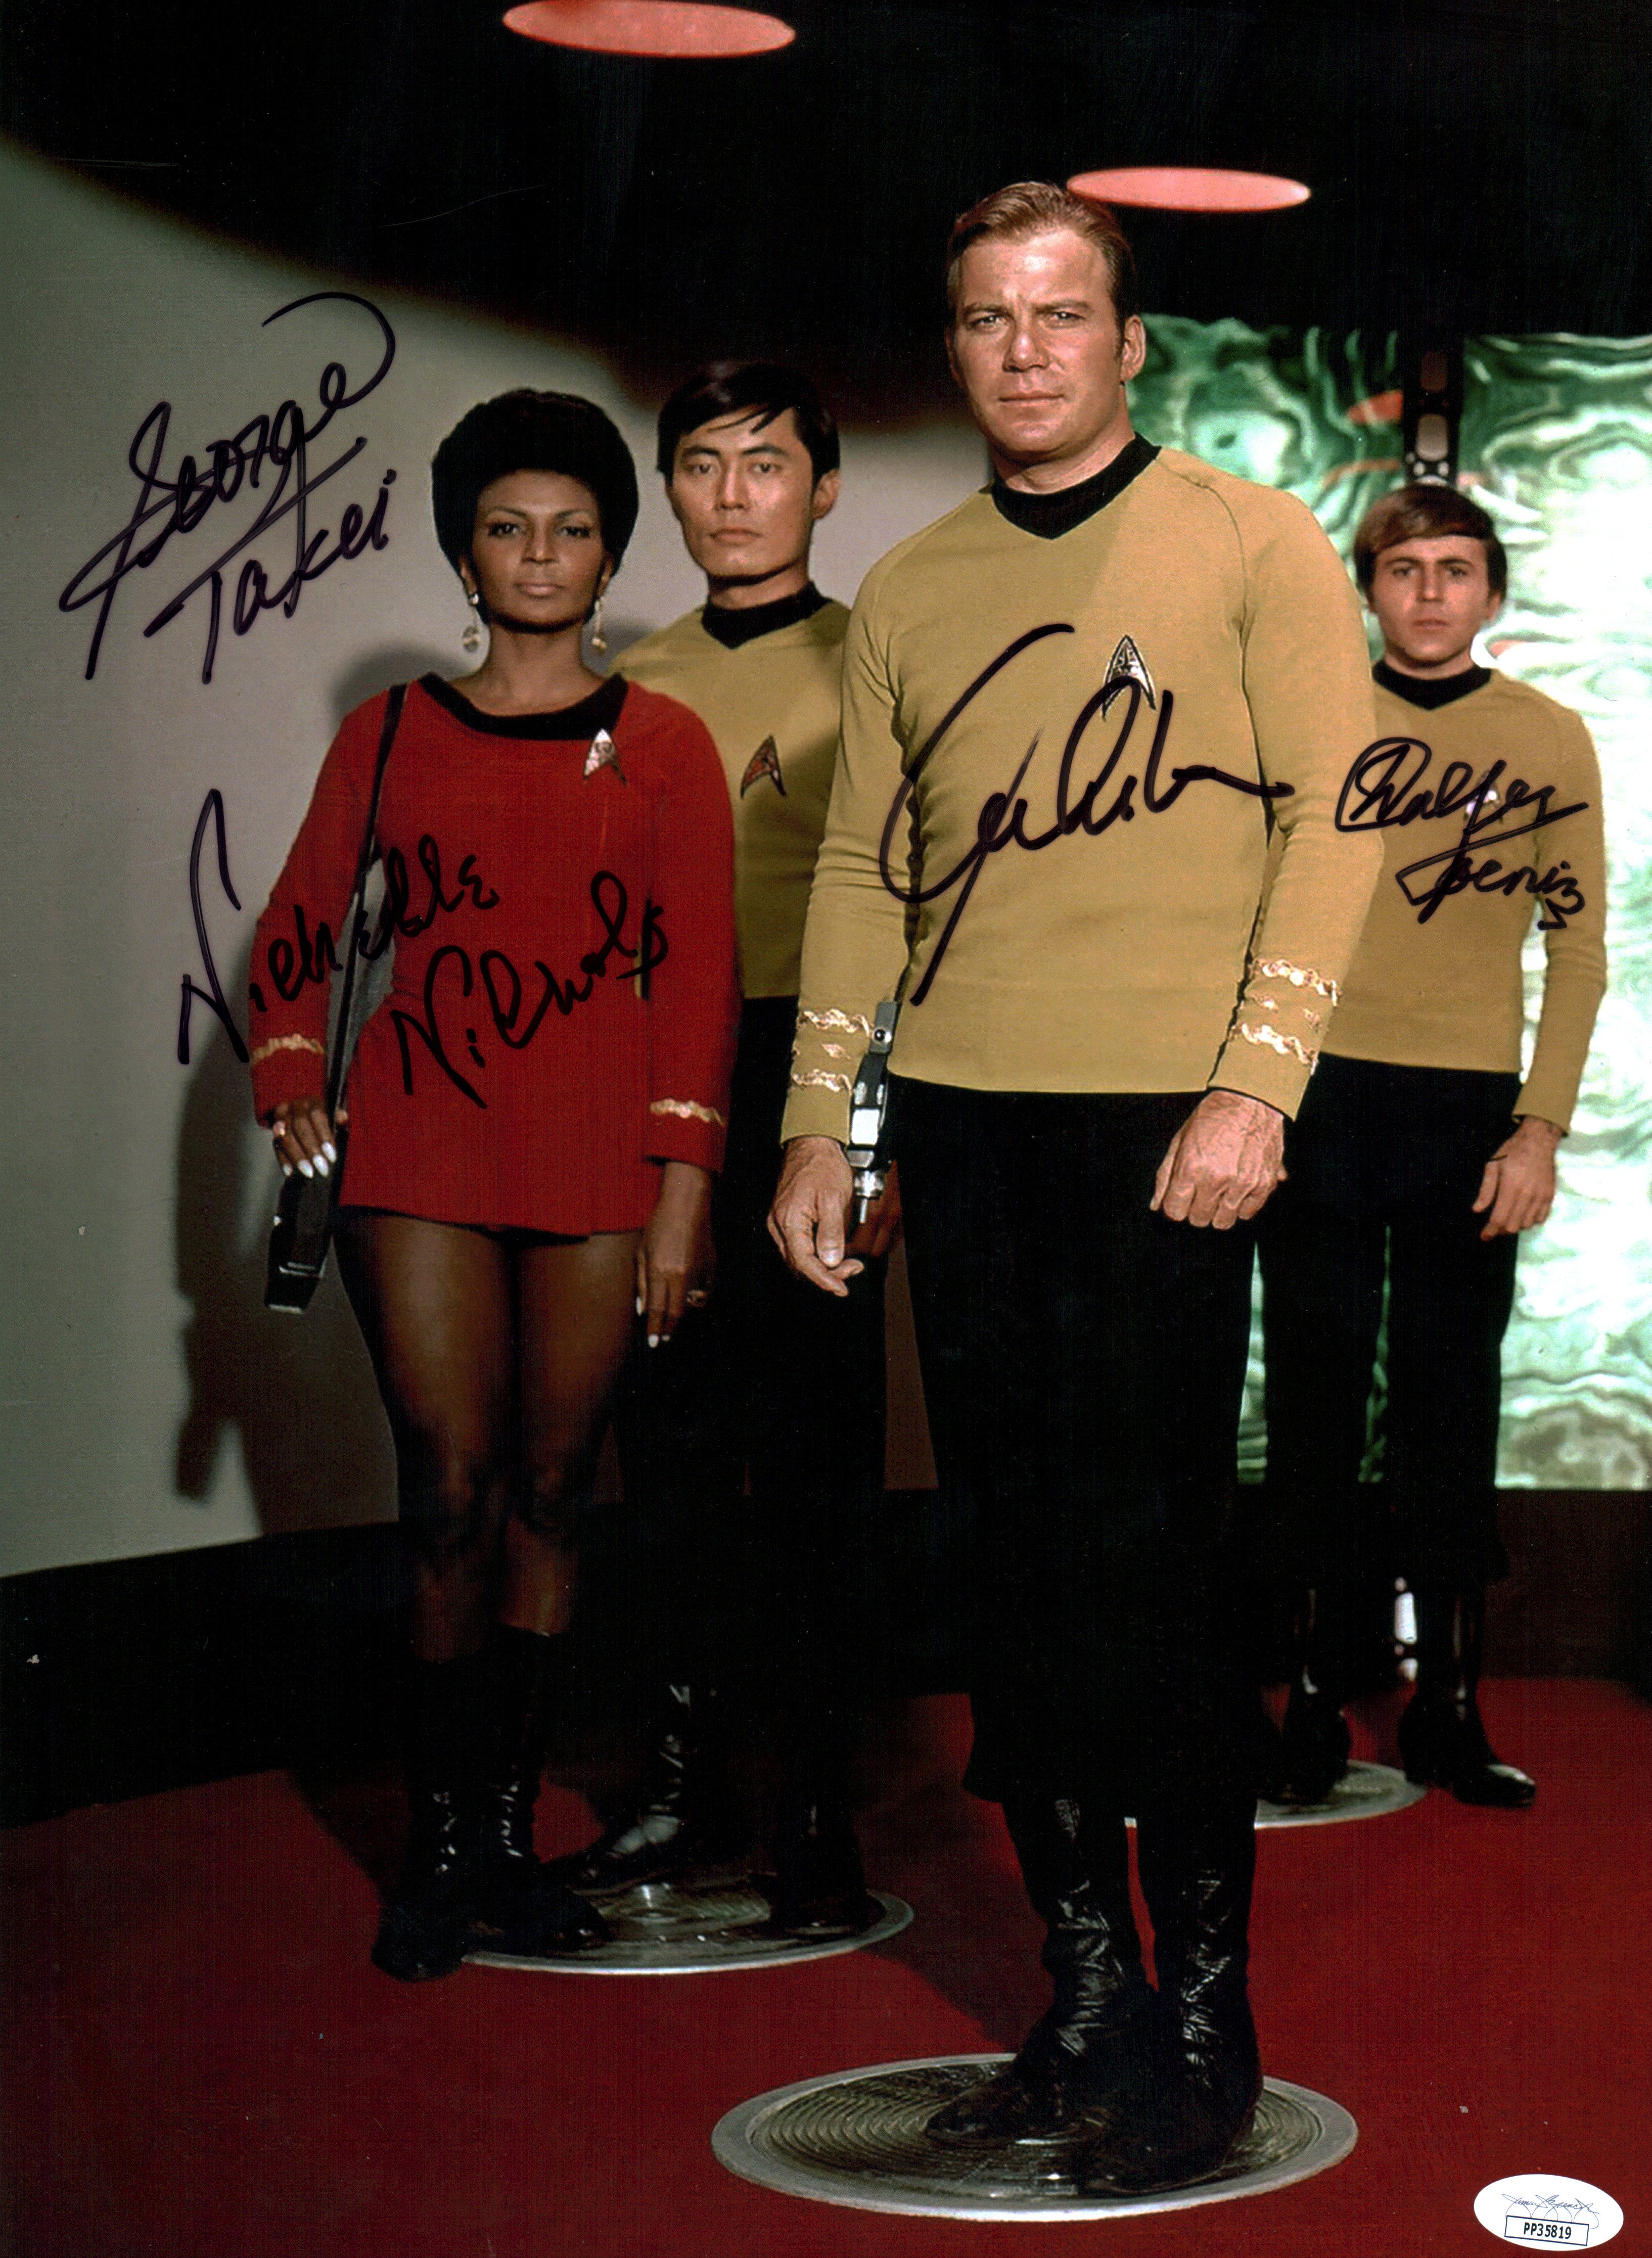 Star Trek The Original Series 11x17 Mini Poster Cast x4 Signed Koenig Nichols Shatner Takei JSA Certified Autograph